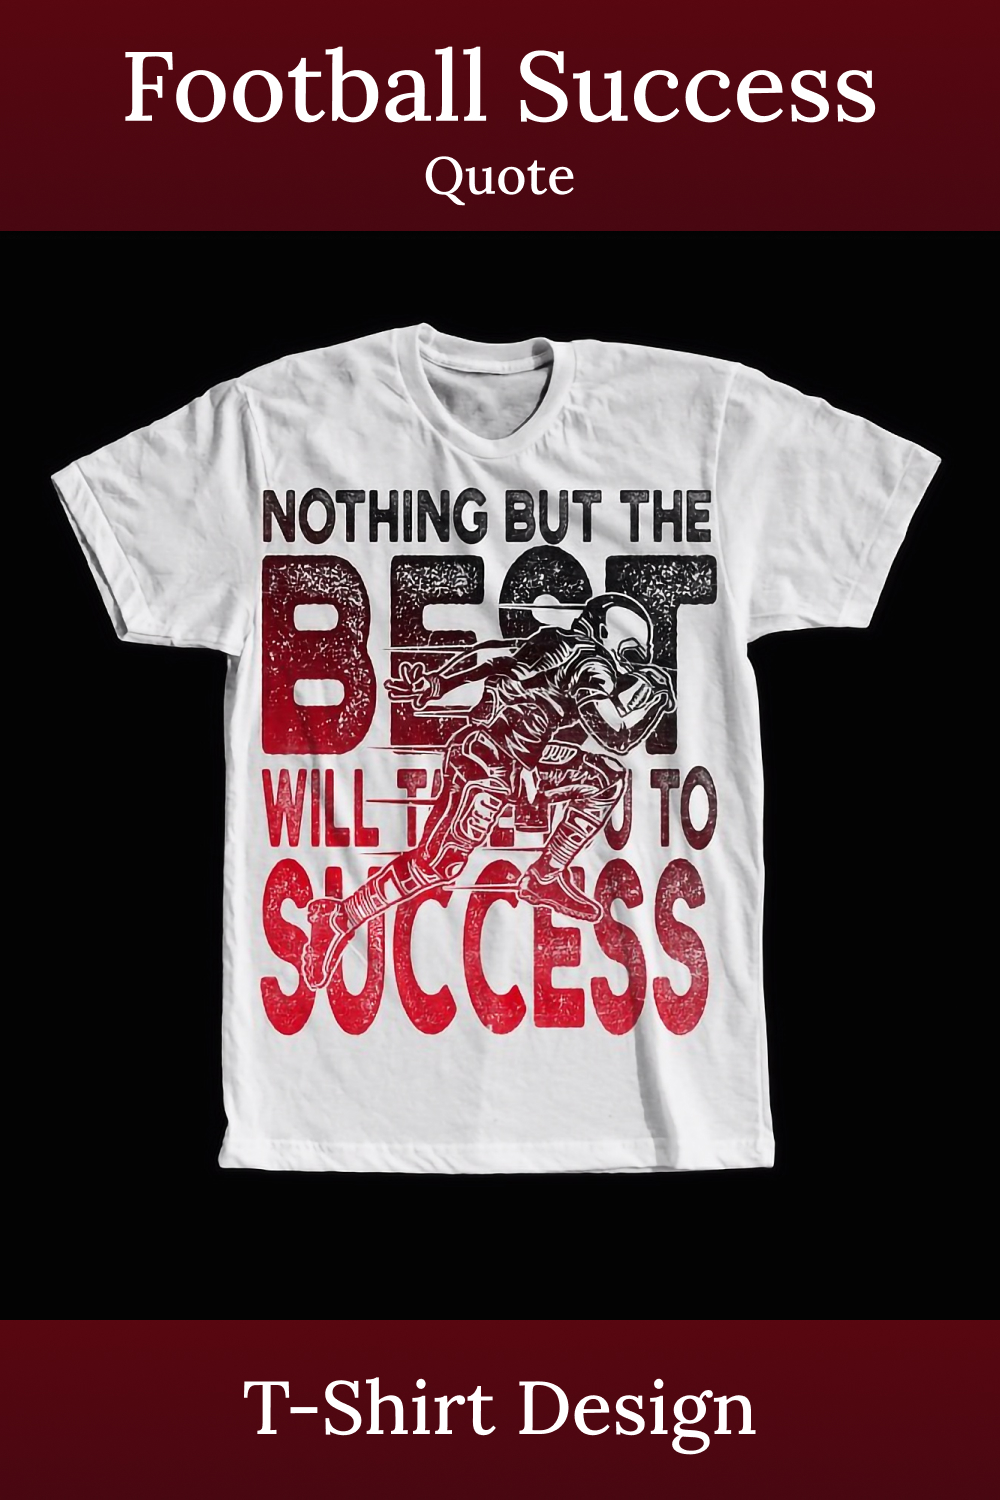 football success quote tshirt design 02